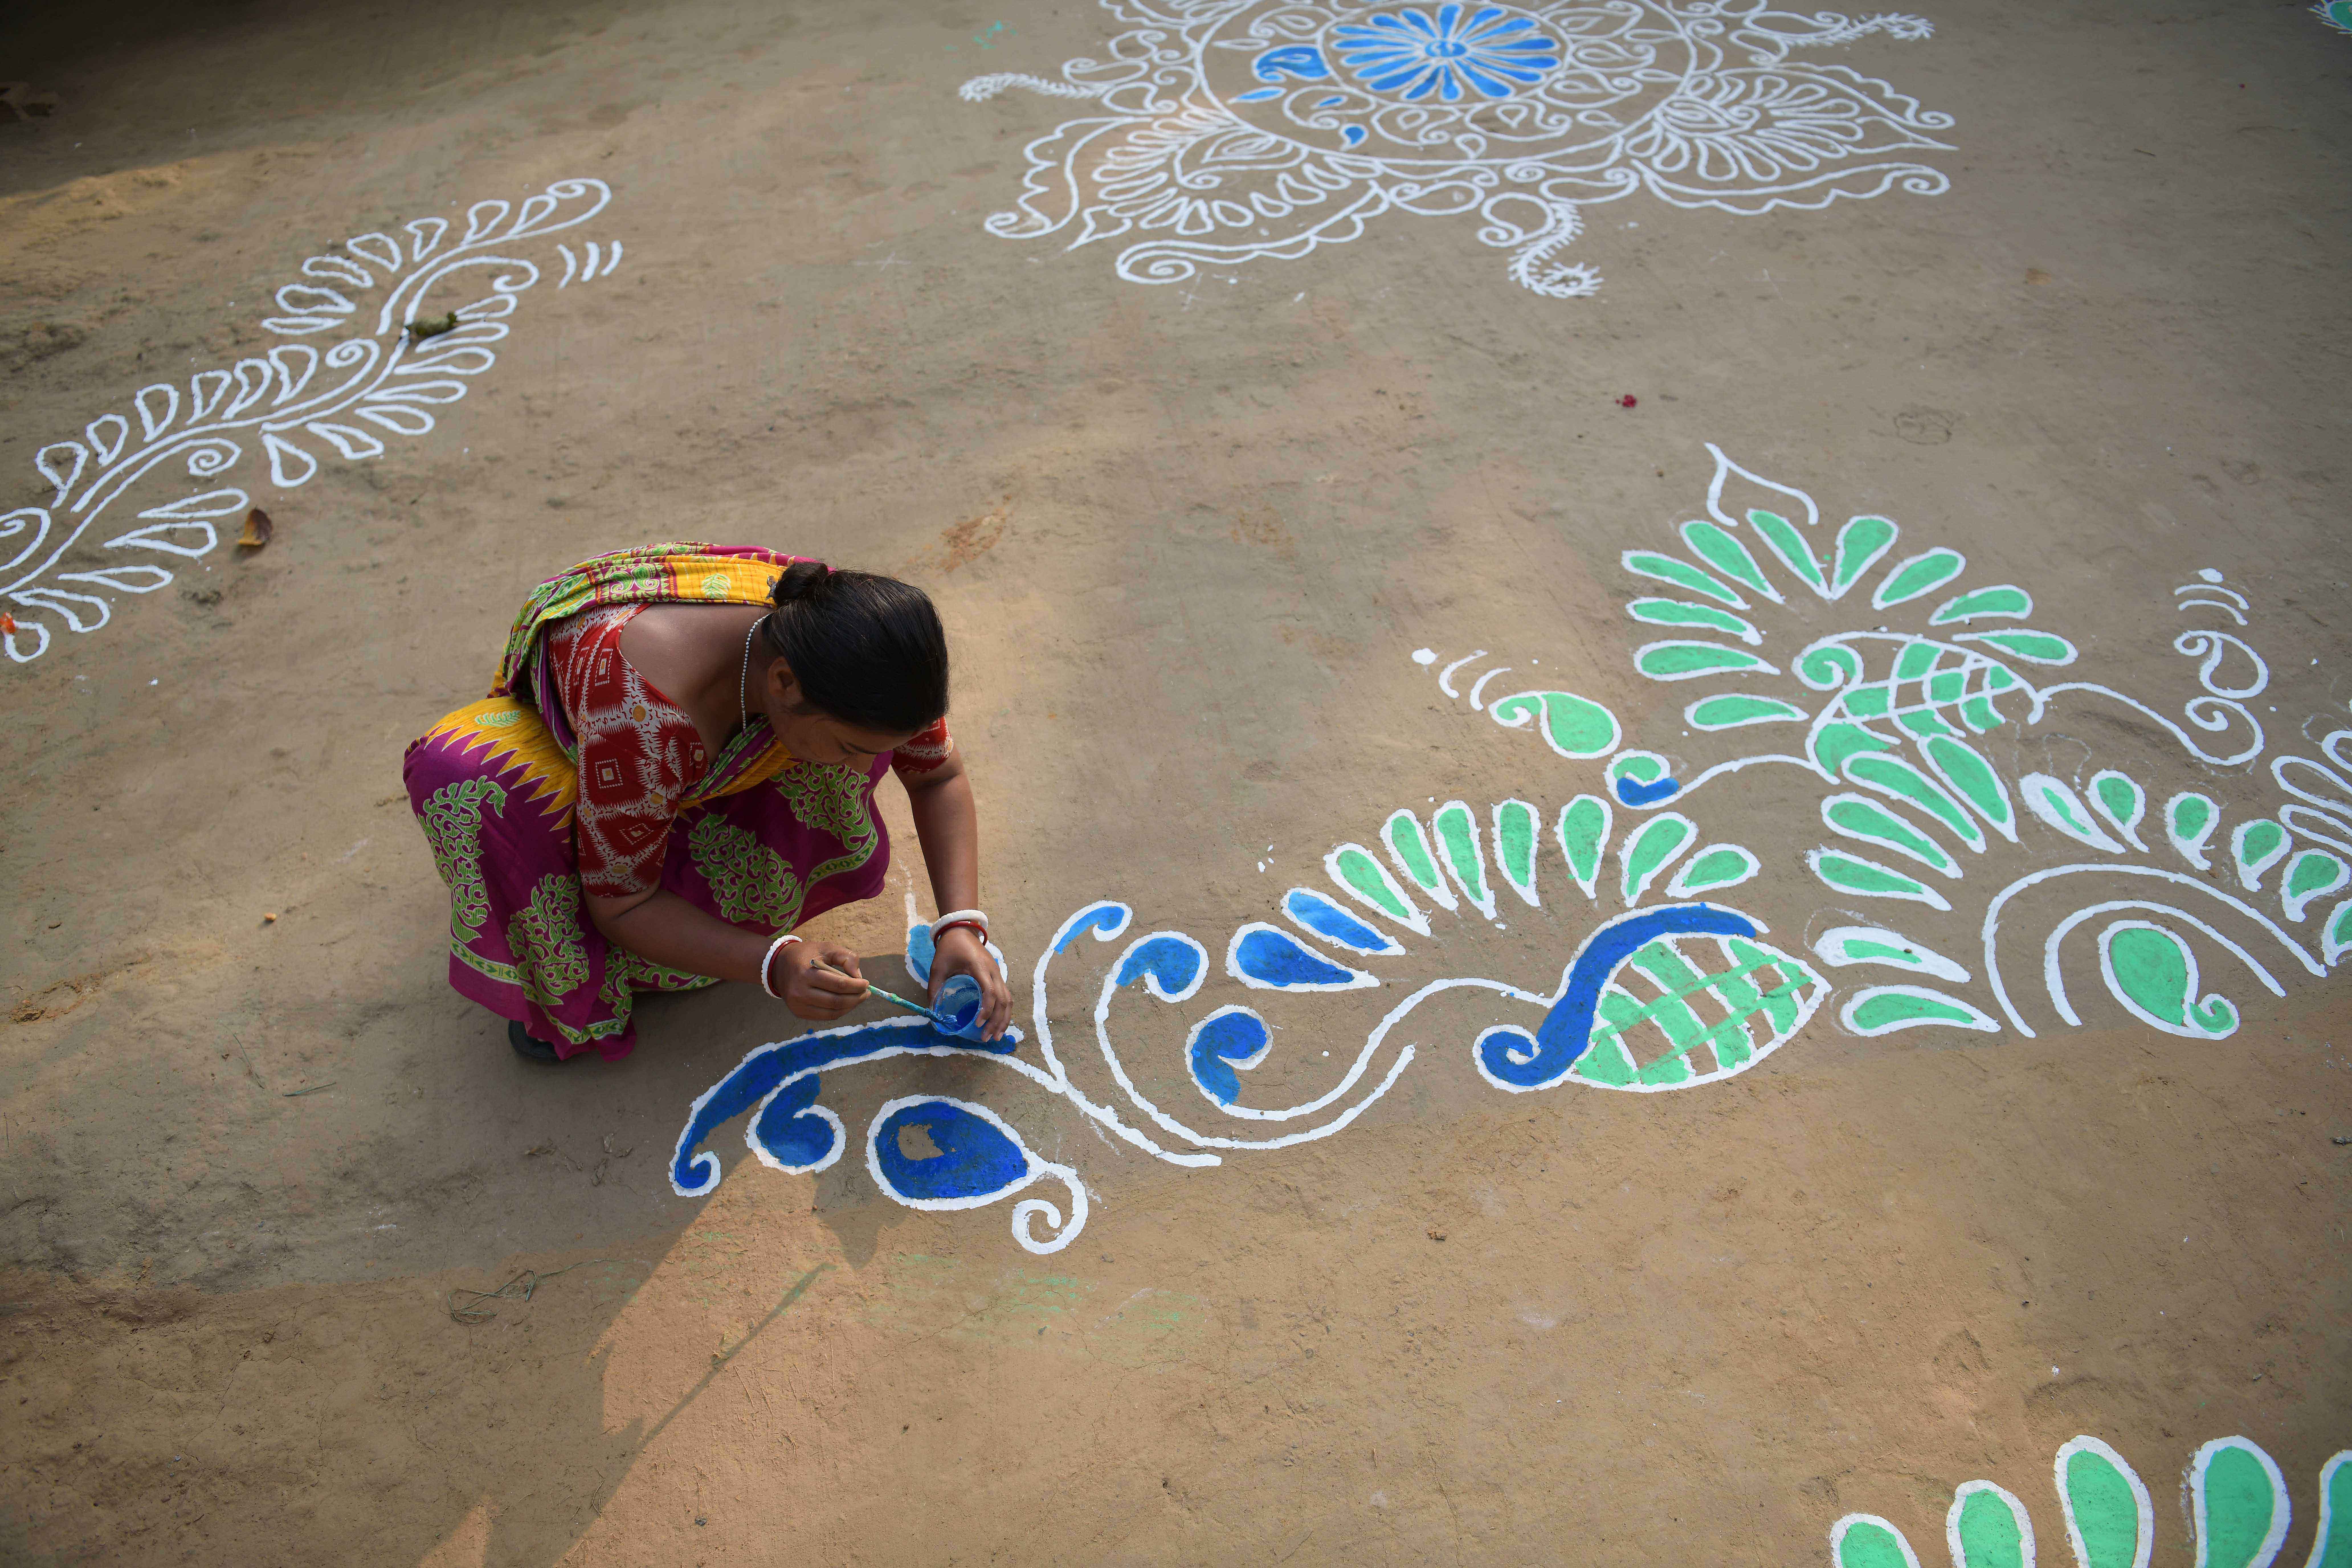 AGARTALA, Seorang wanita melukis "Alpona", atau berbagai motif suci yang berwarna-warni di atas lantai, di halaman di Agartala, ibu kota Negara Bagian Tripura, India timur laut, pada 13 Januari 2022. (Xinhua/Str)